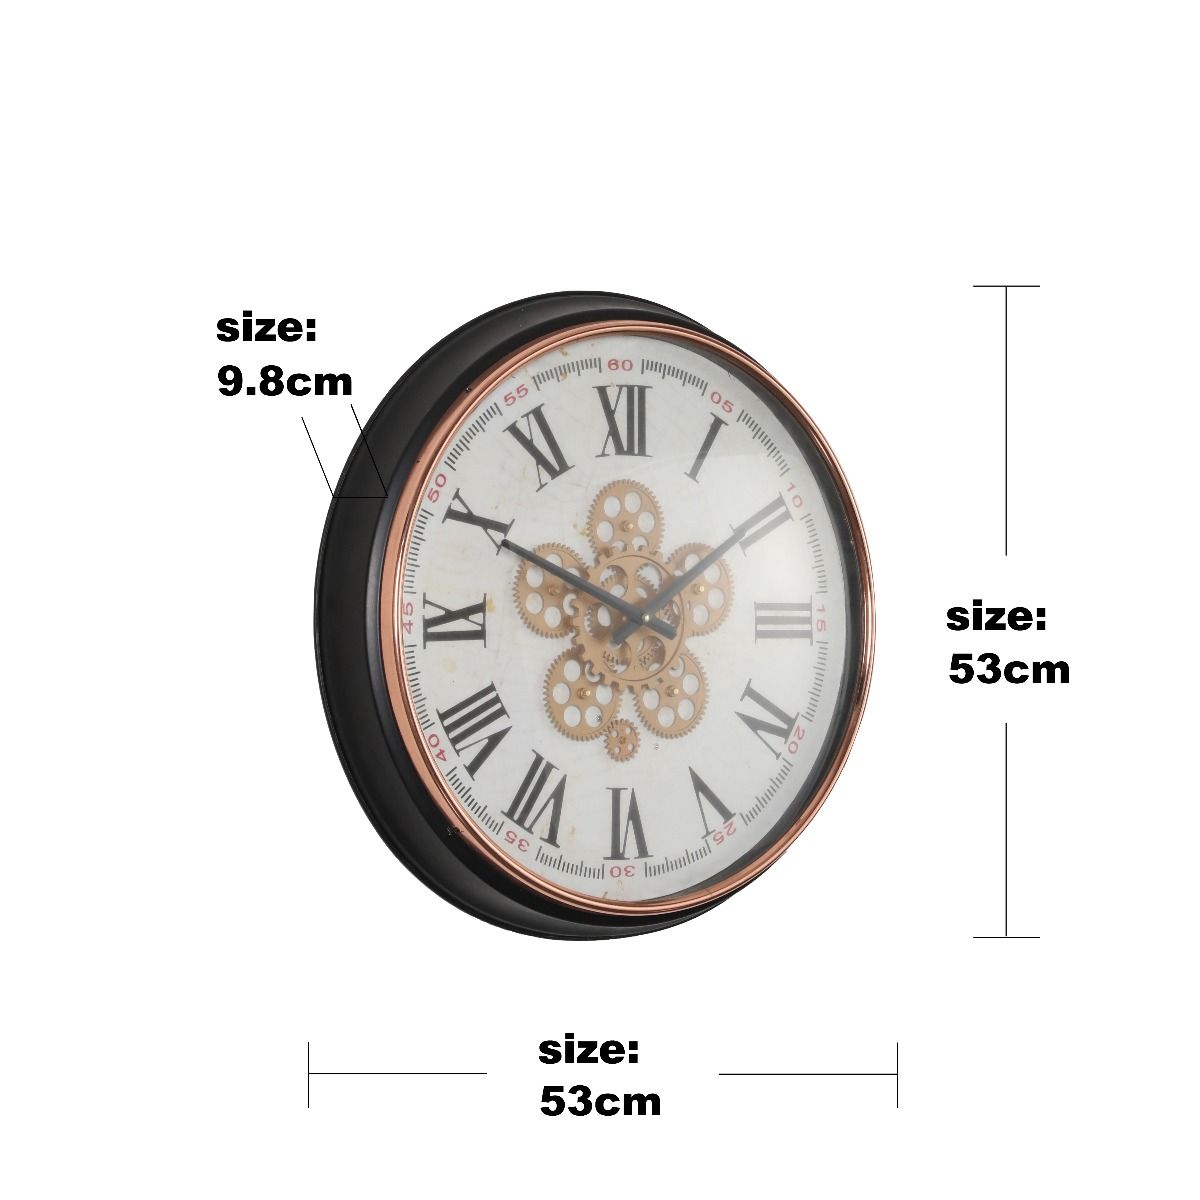 Industrial/vintage-inspired clock range - MODEL 09